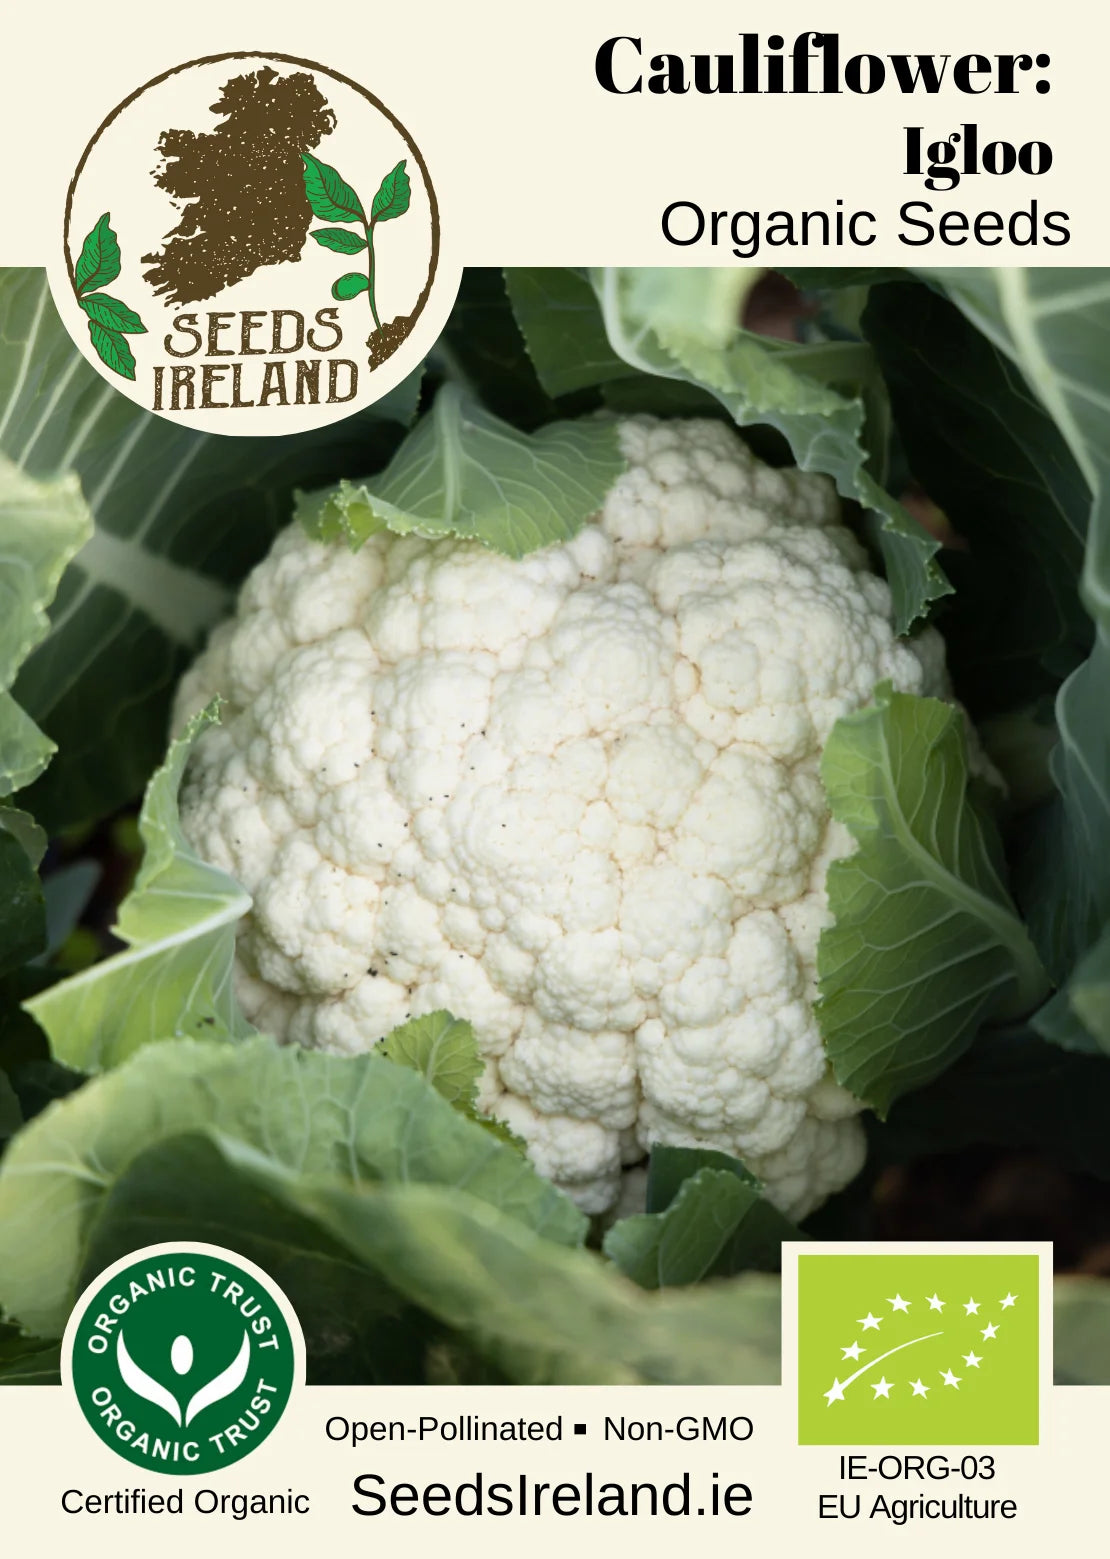 Cauliflower: Igloo Organic Seed